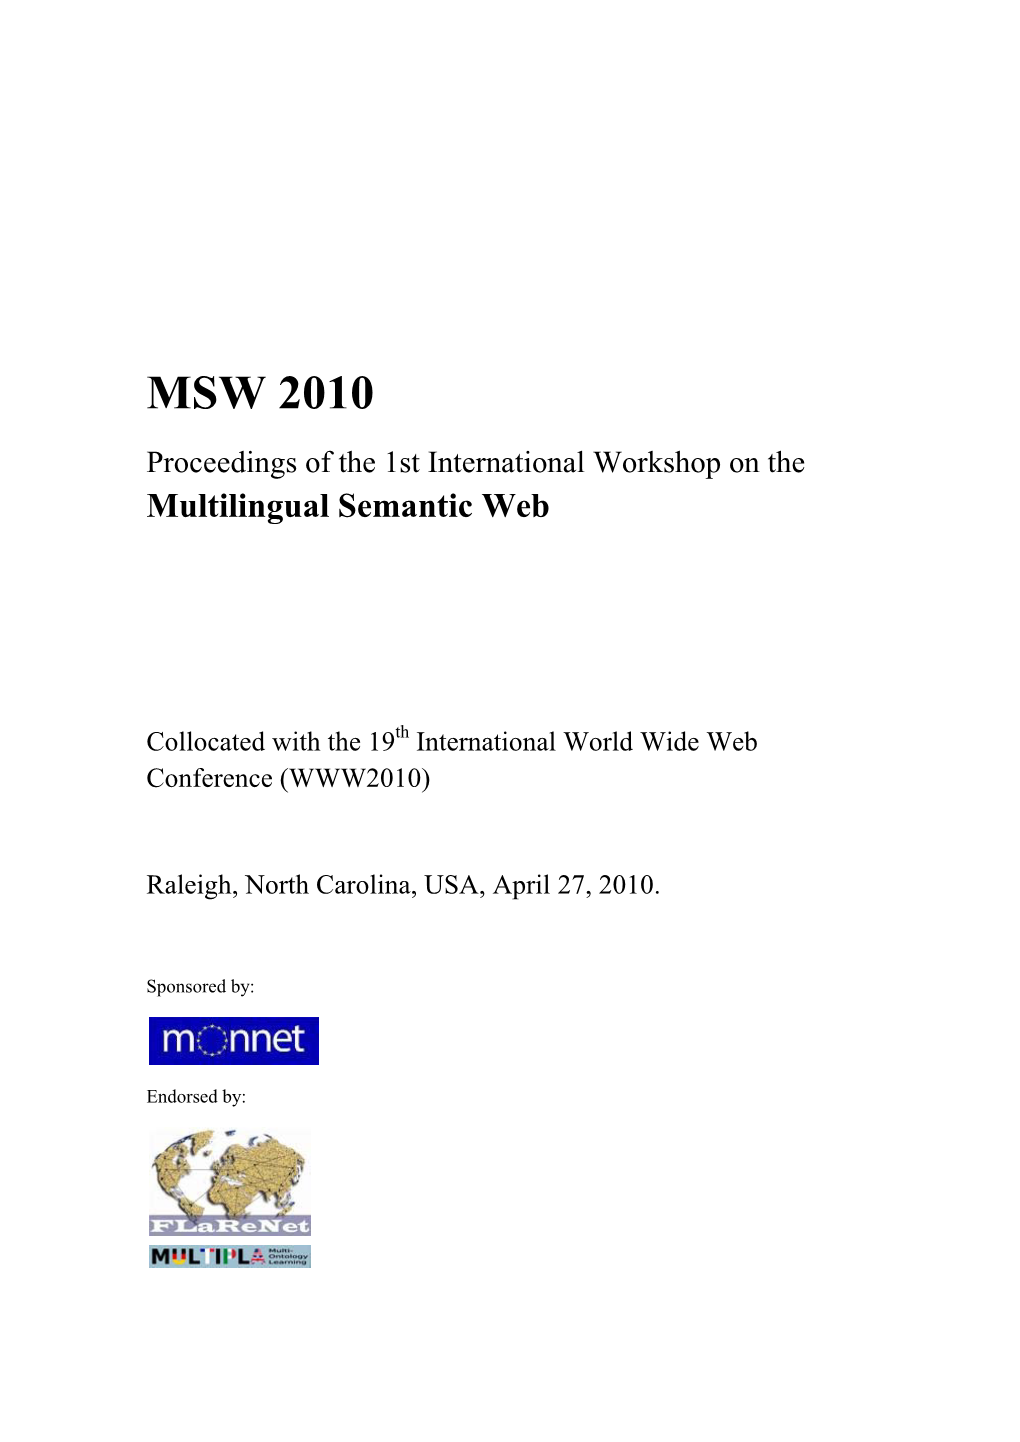 MSW 2010 Proceedings of the 1St International Workshop on the Multilingual Semantic Web